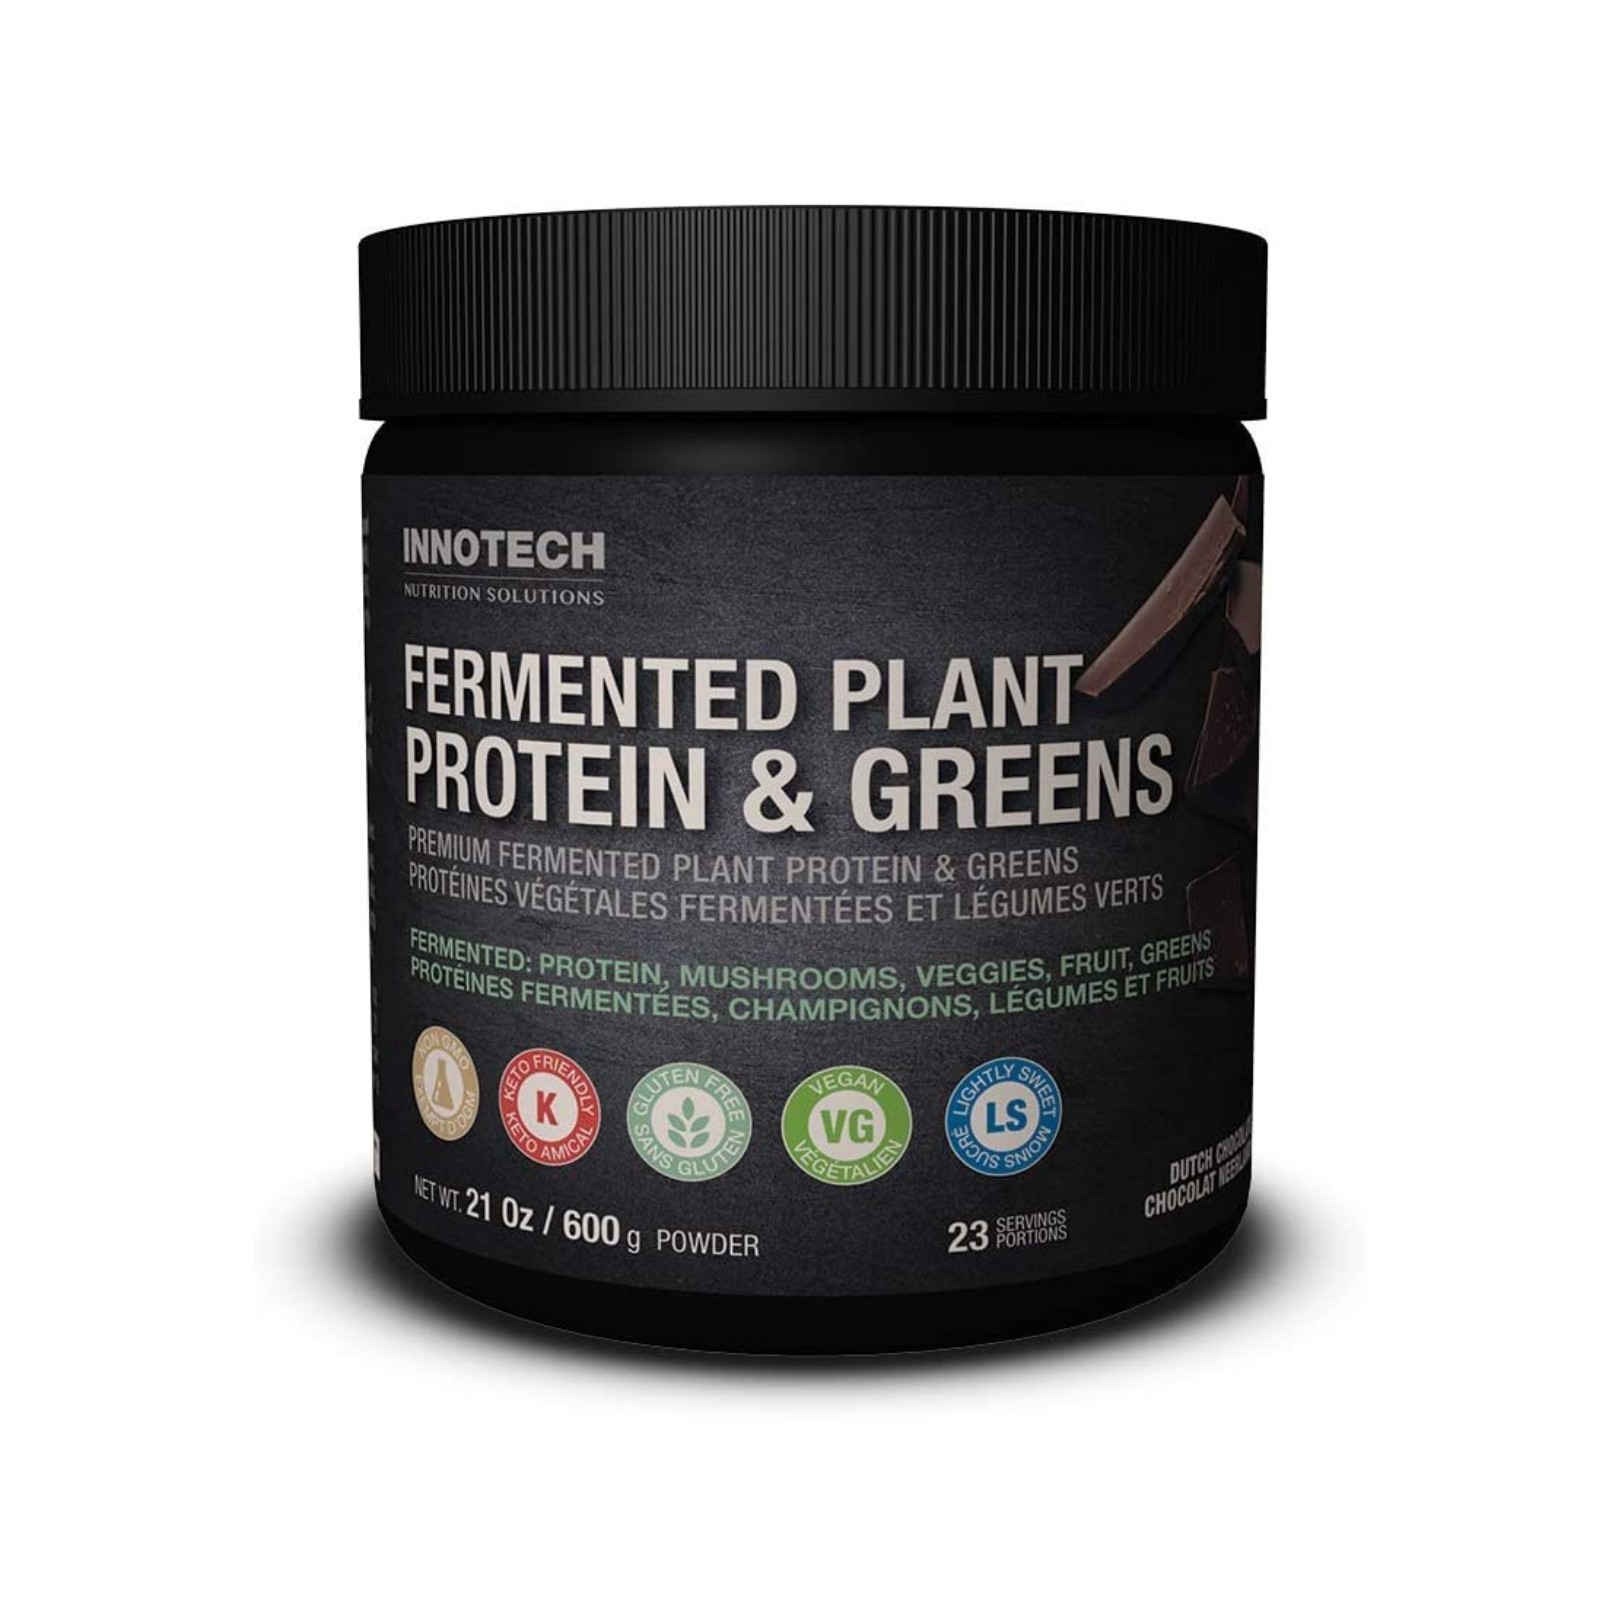 Protein & thực phẩm xanh lên men Innotech Nutrition Solutions Fermented Plant Protein & Greens 1